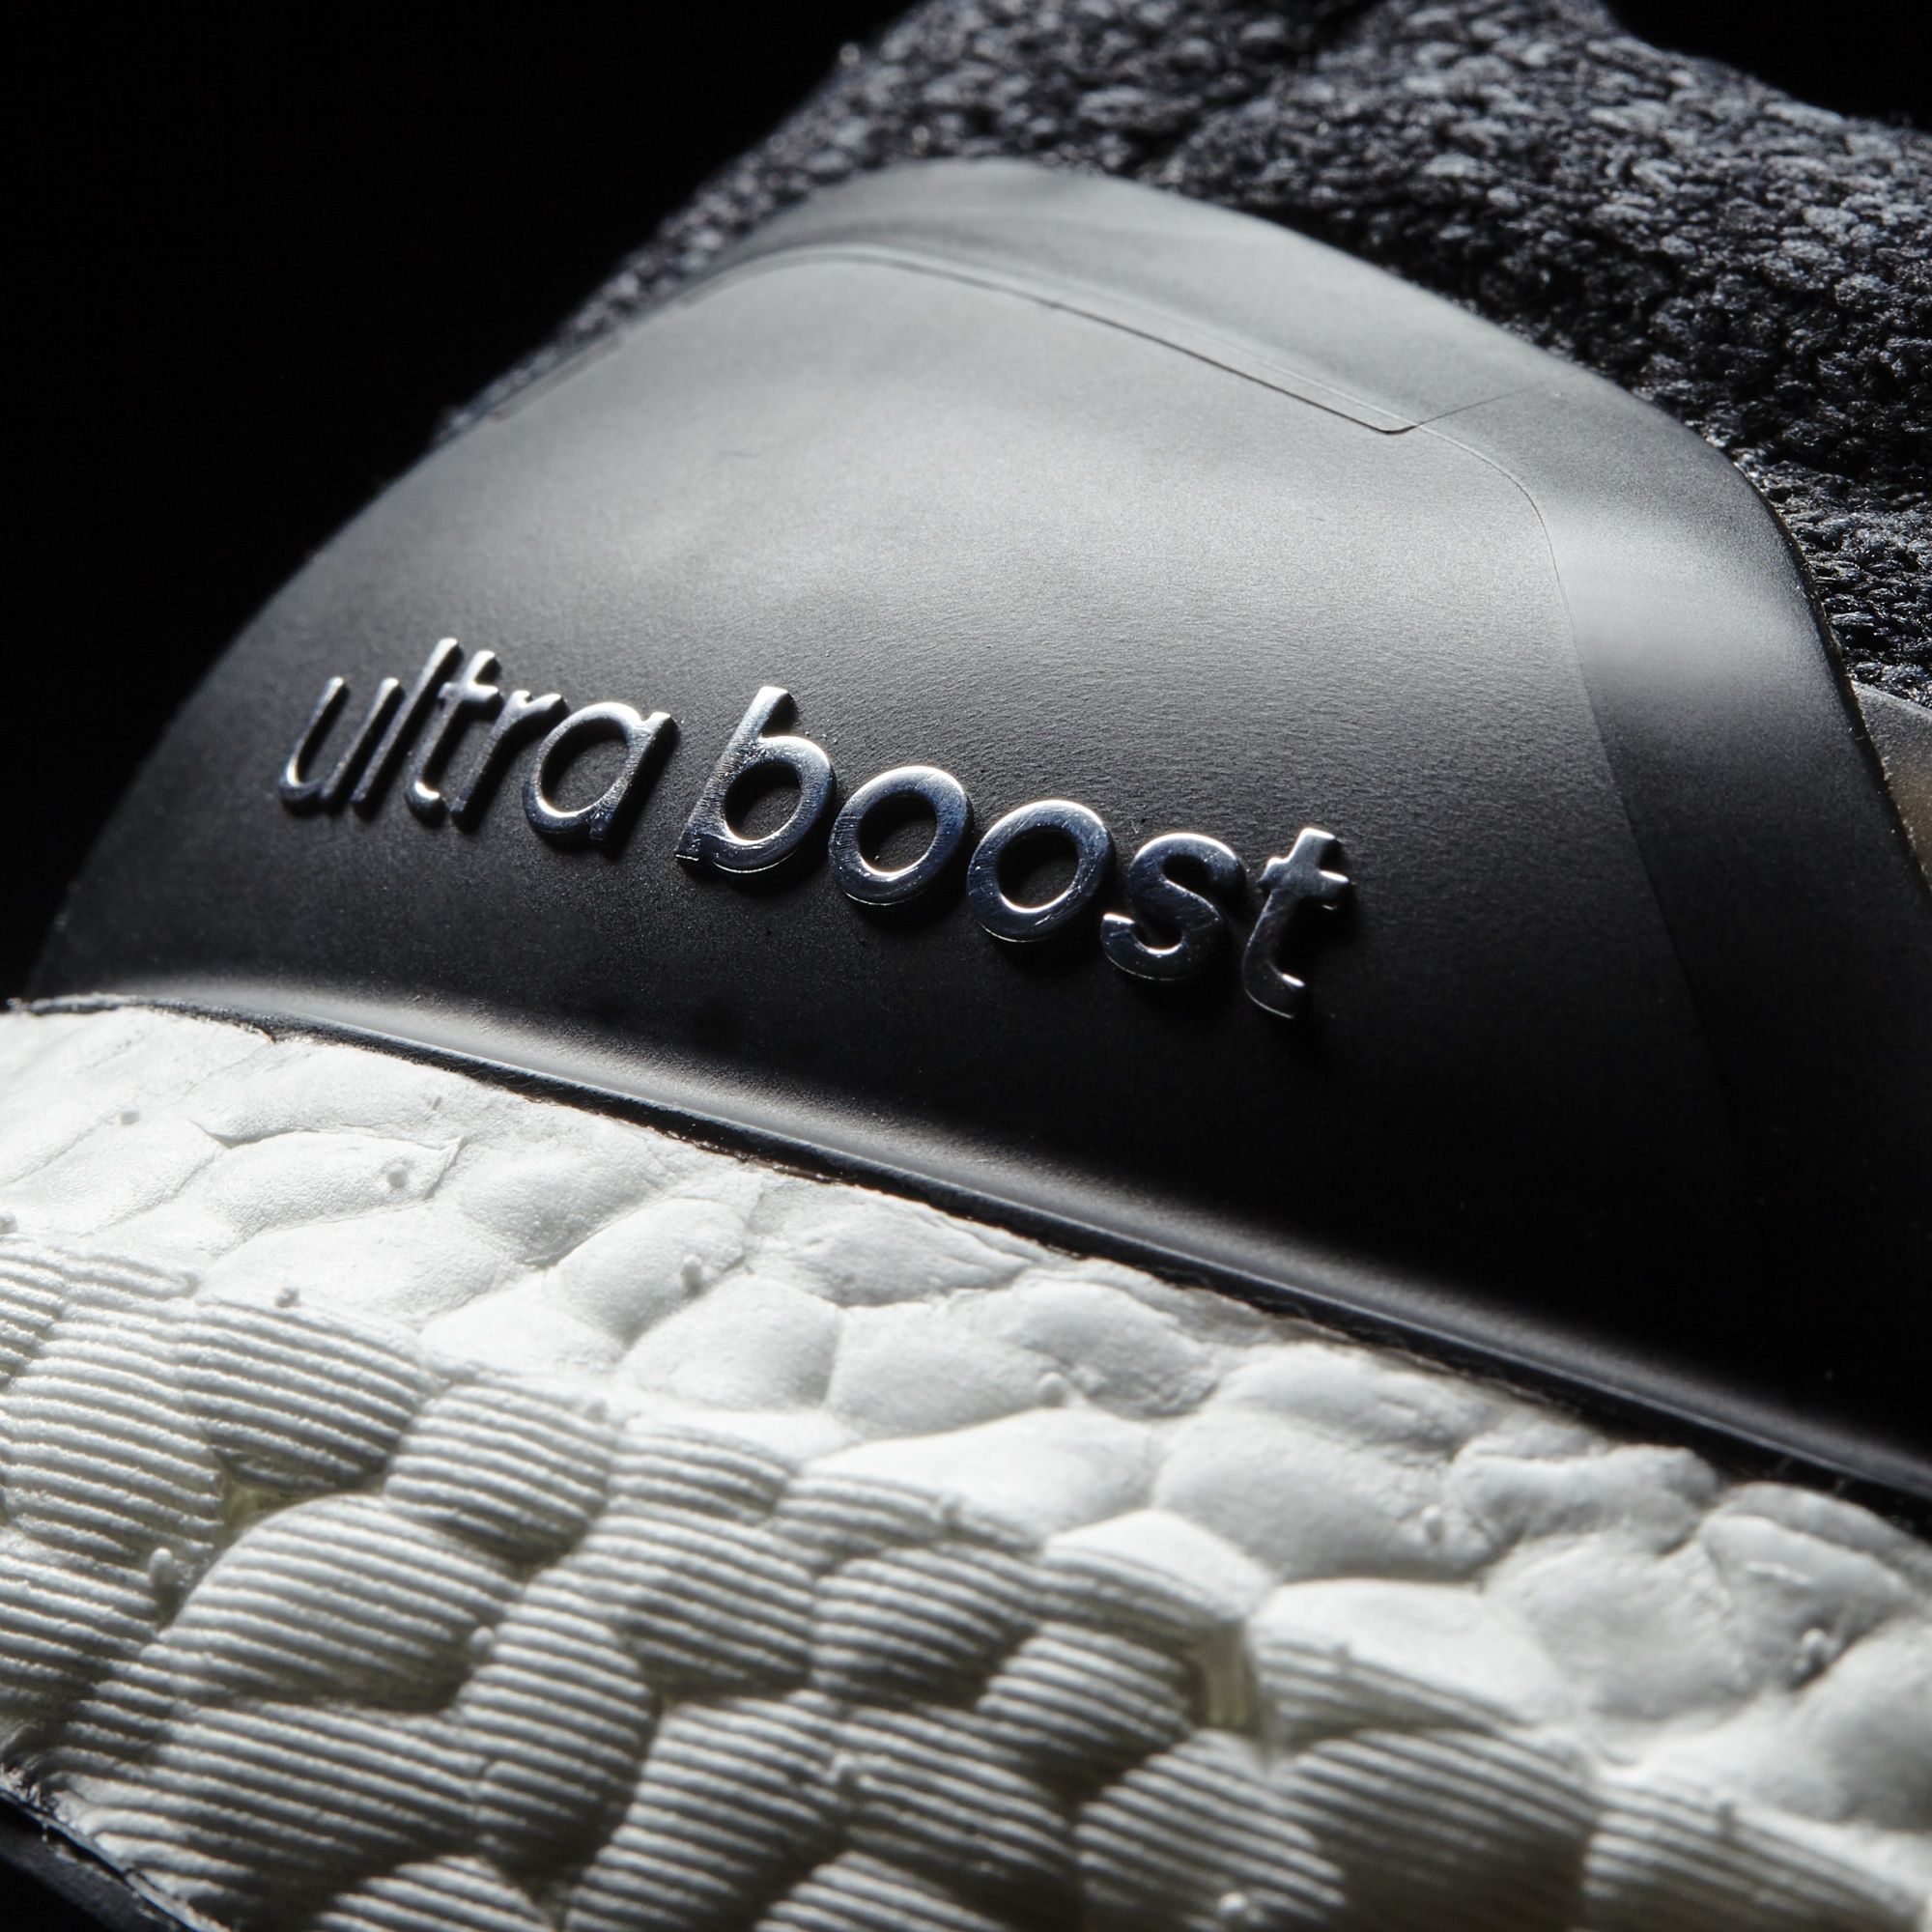 Adidas Ultra Boost 3.0
Core Black / Dark Grey